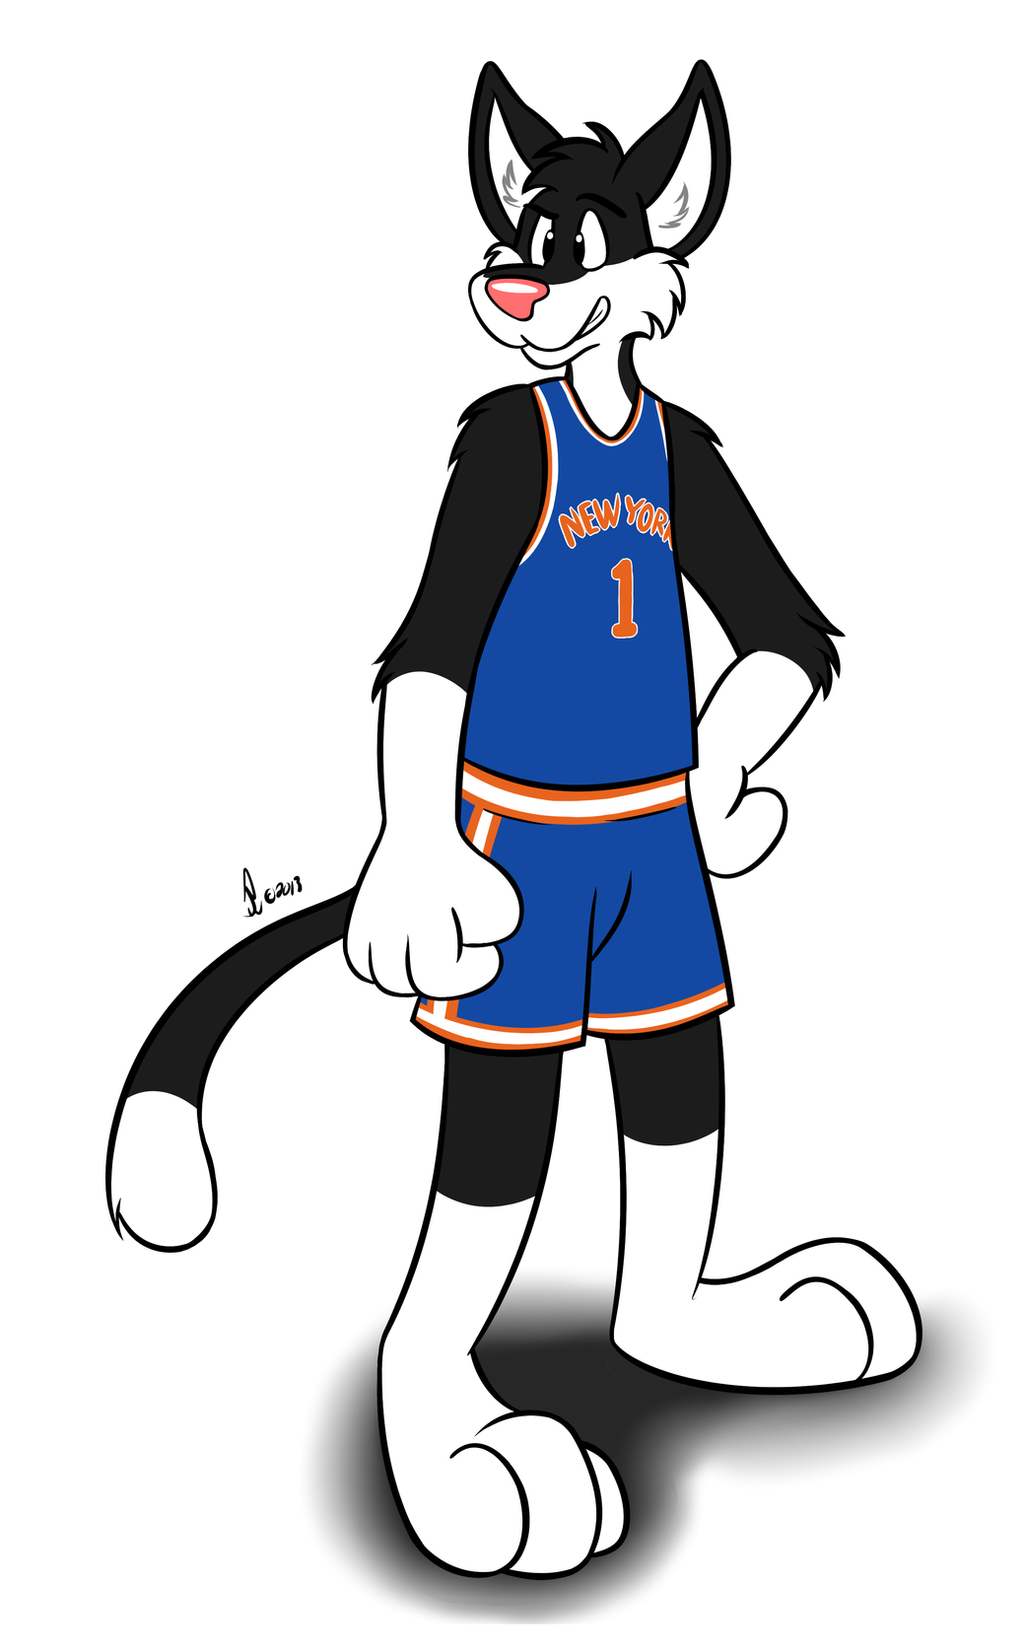 NBA Mascots - Tom Cat (no mascot) by Bleuxwolf on DeviantArt